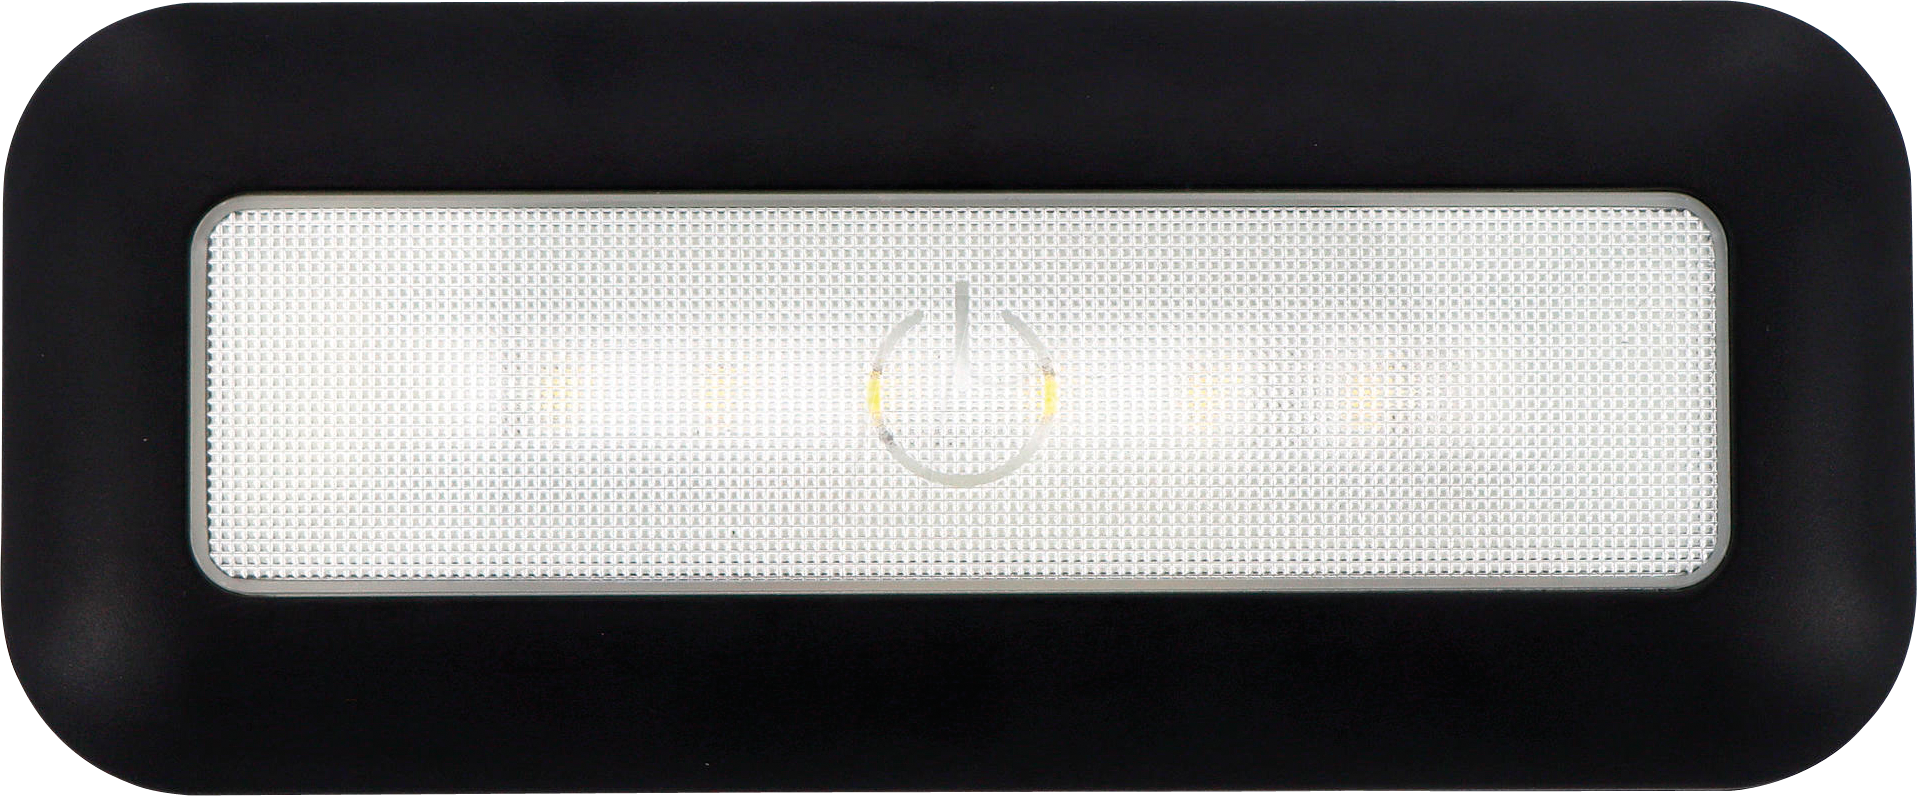 MLI 27700057 - Mobile LED-Leuchte Mobina Push 15, 4000 K, schwarz, Akku von Müller Licht